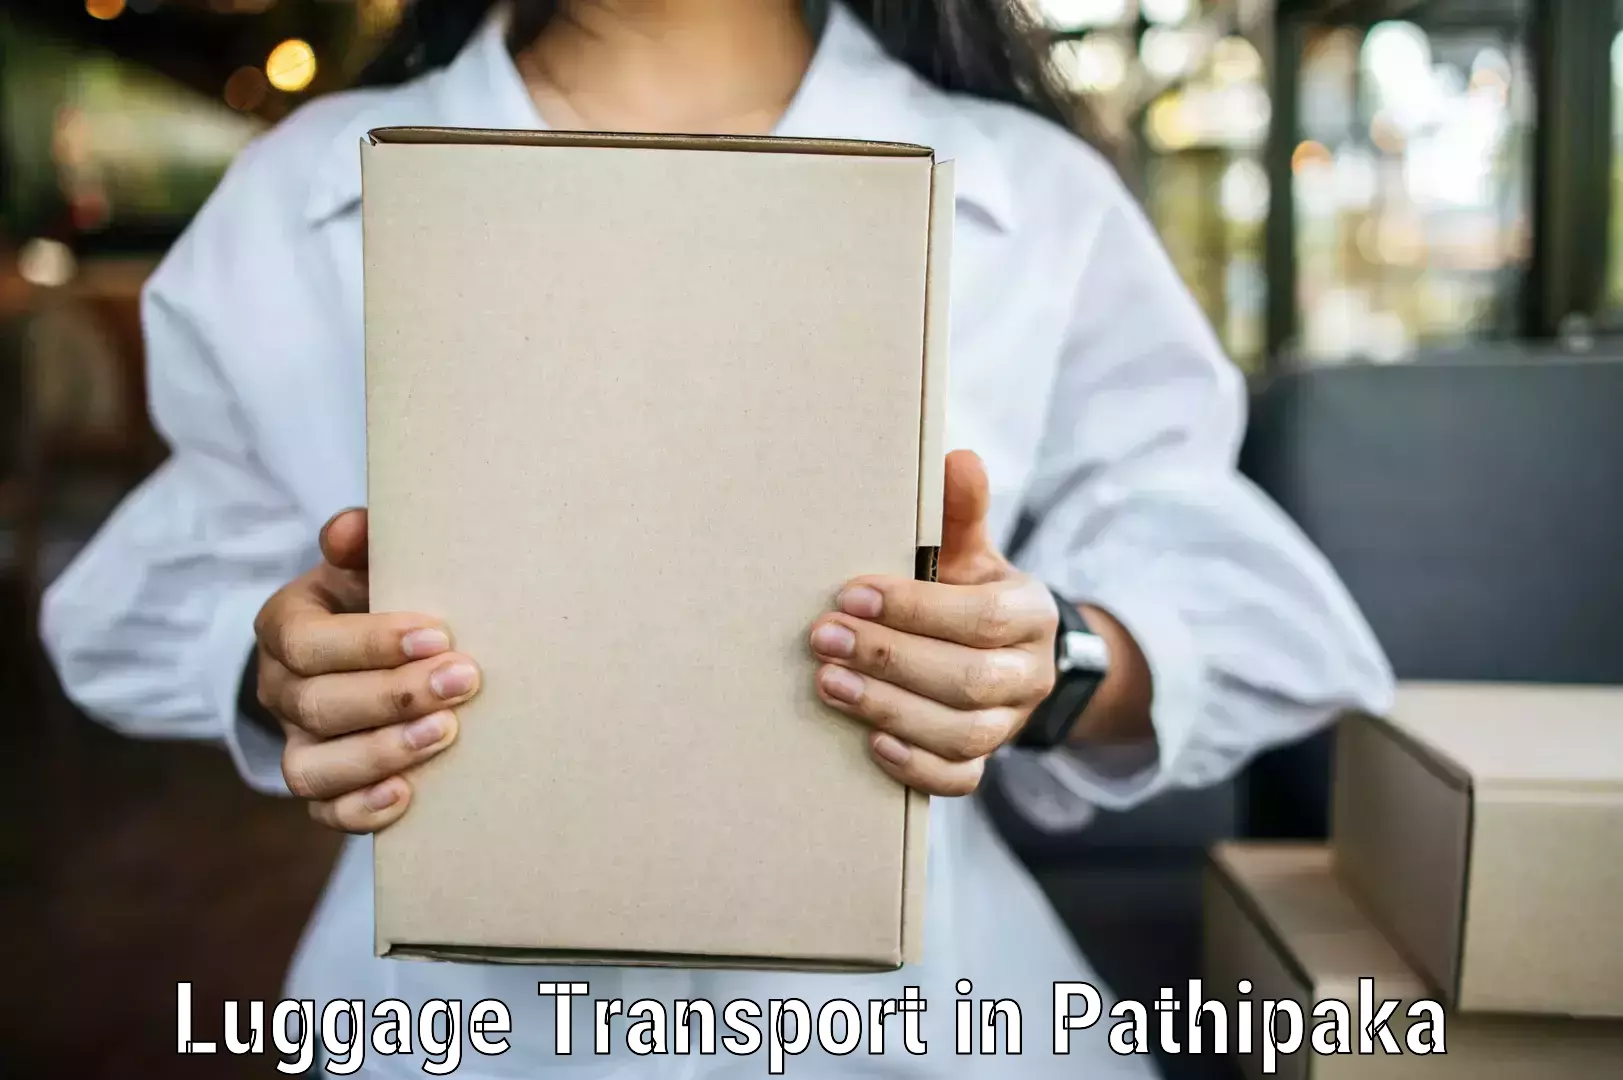 Express baggage shipping in Pathipaka